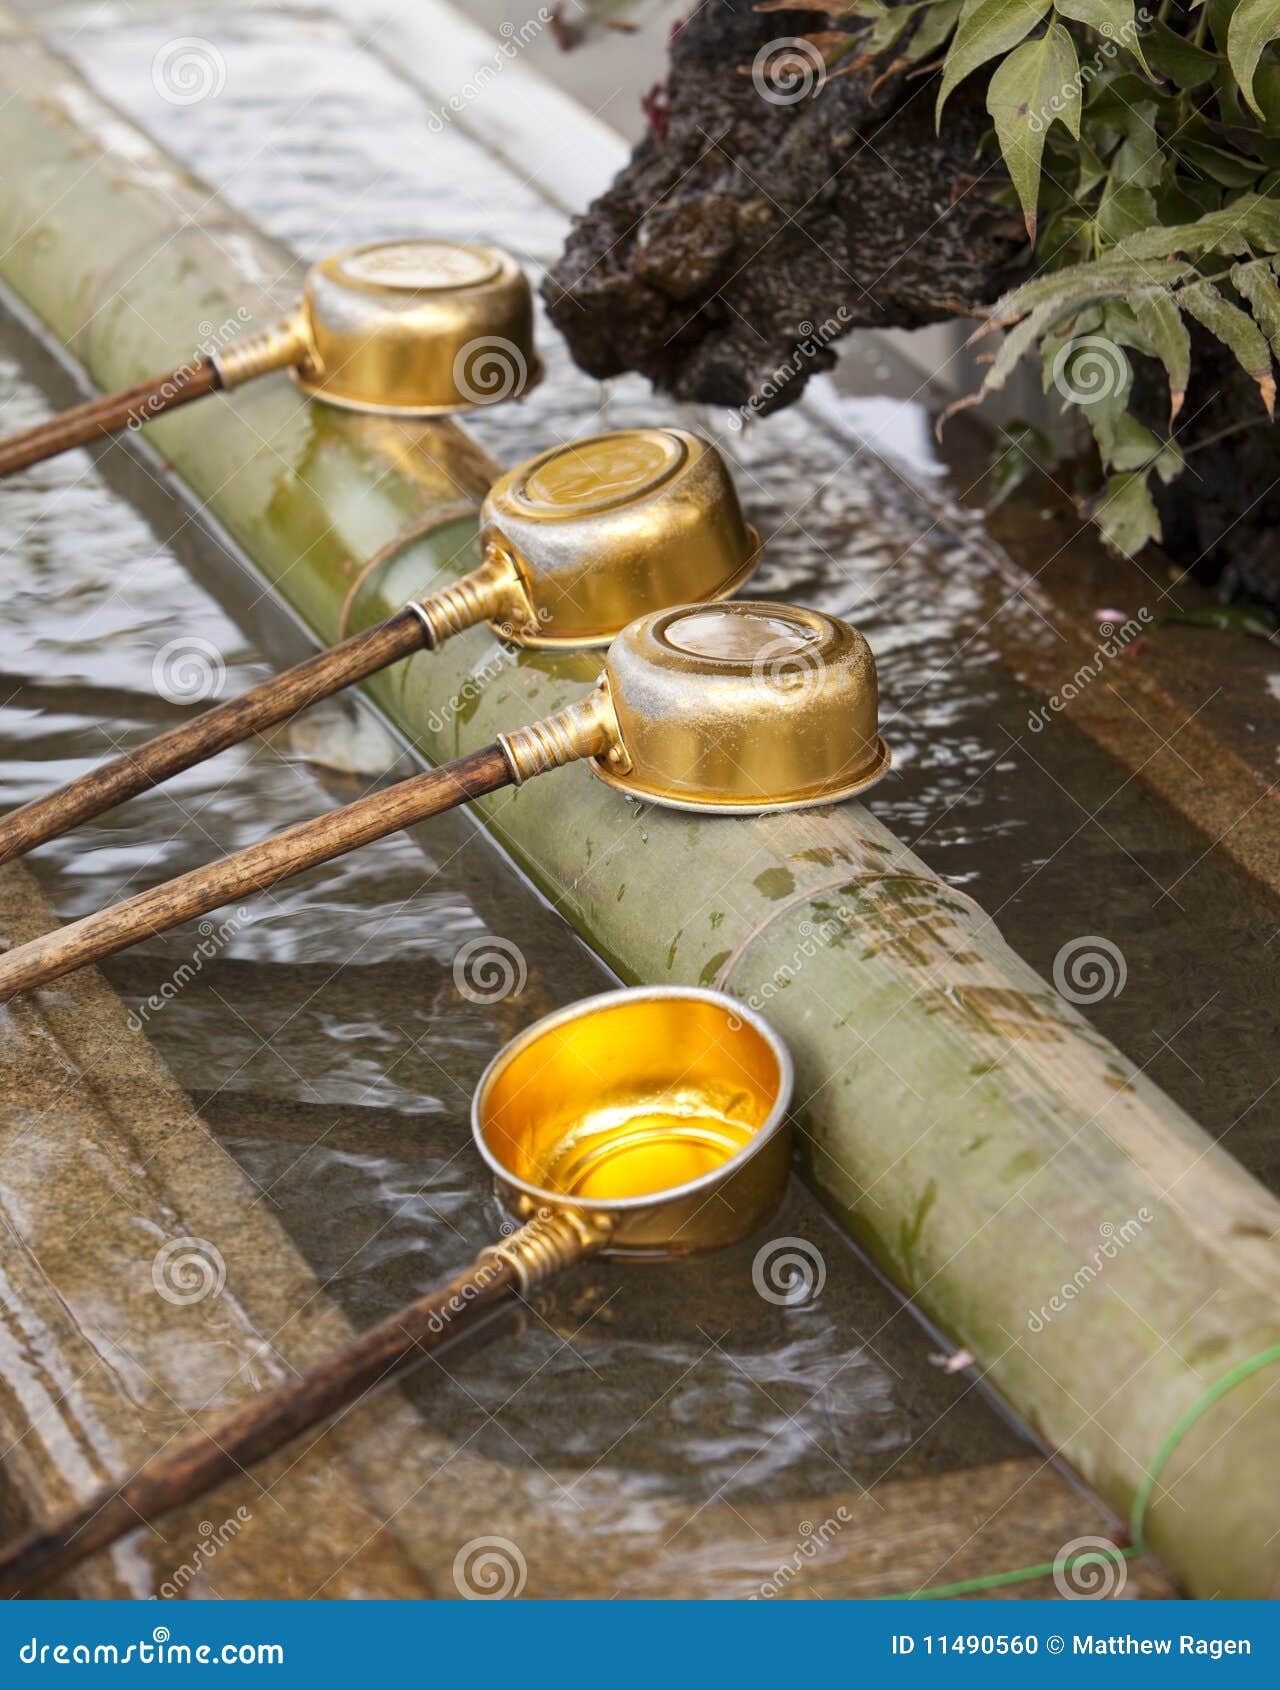 shinto shrine purification ladles